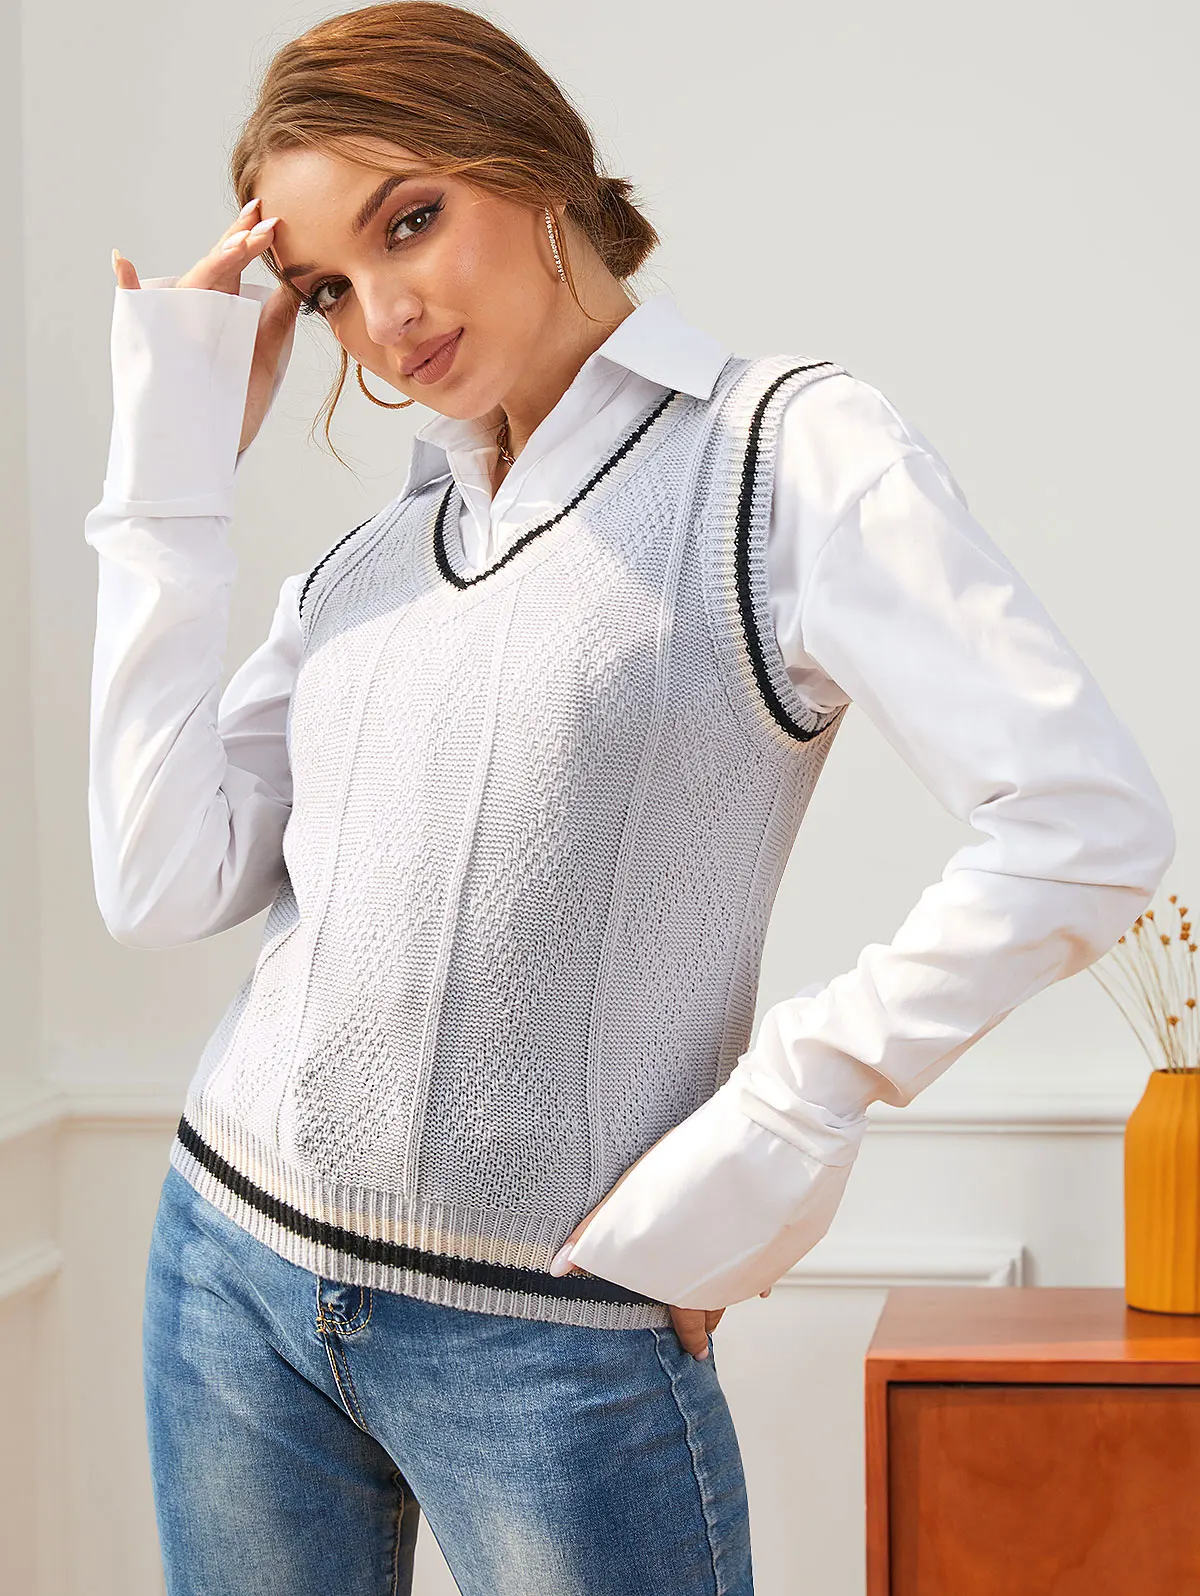 

ZAFUL Striped Trim Argyle Knit Sweater Vest Girls Preppy Style Cricket Jumper Sleeveless Sweater for Spring Autumn Winter